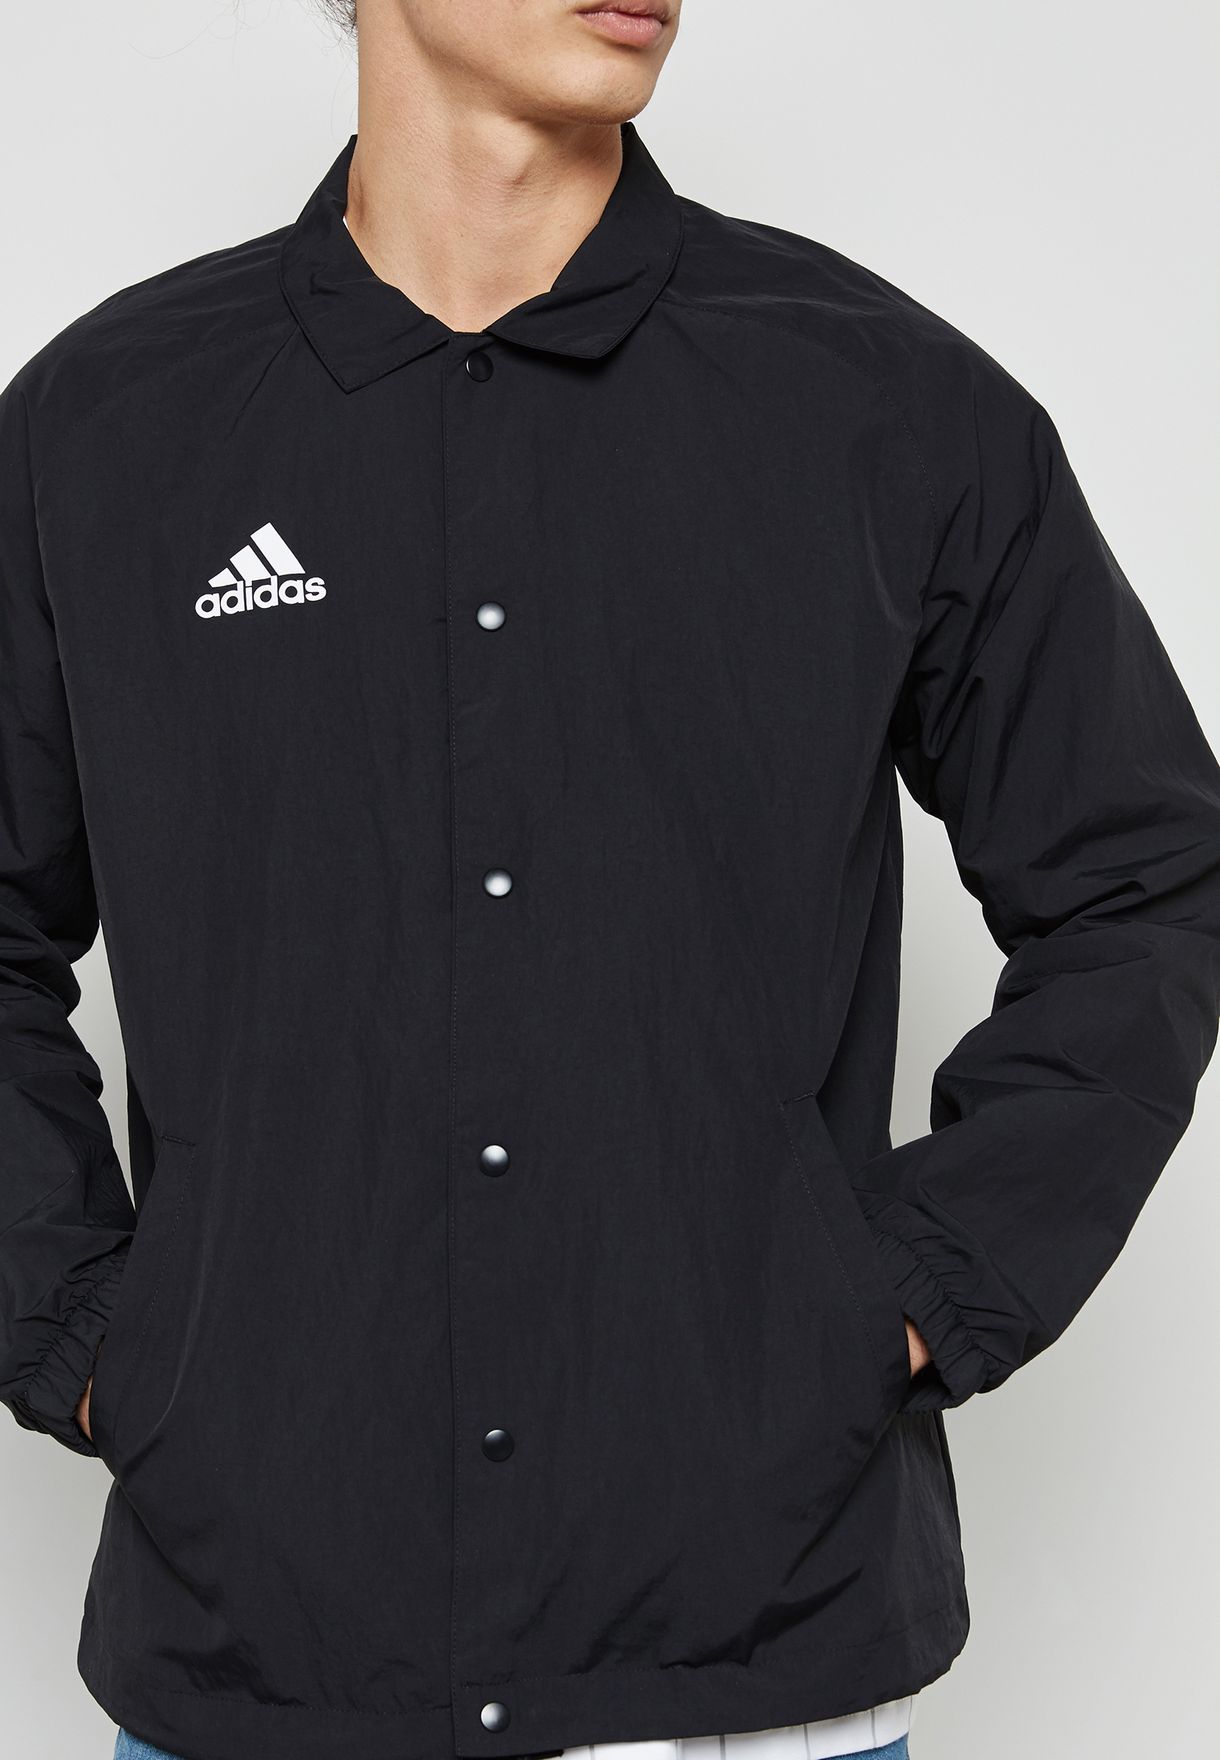 adidas coach jacket black